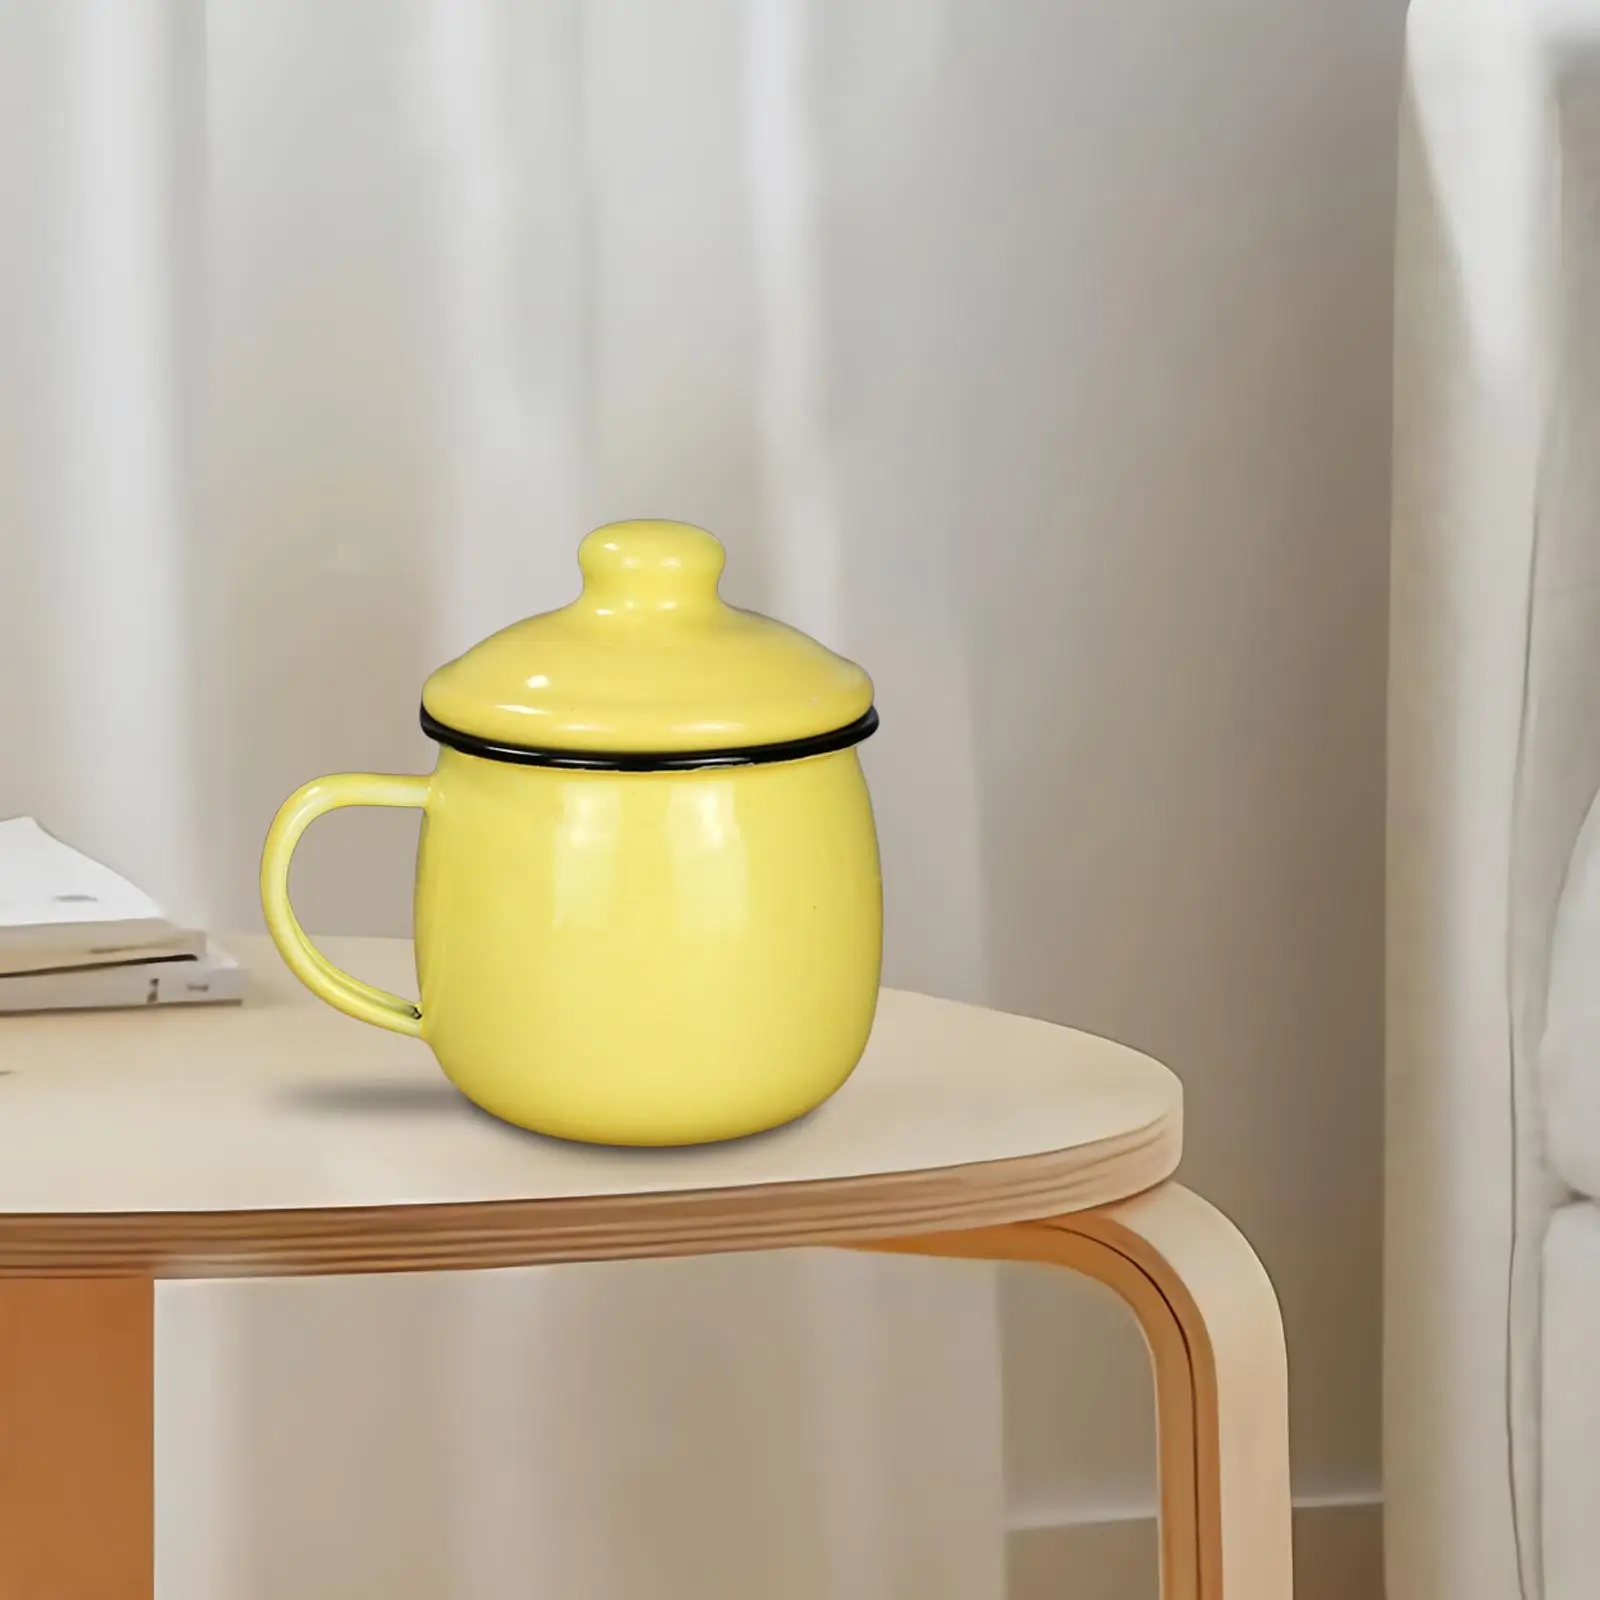 Handmade Enamel Mug with Handle Camping Mug Enamelware Juice Cup Coffee Mug Cup for Office Dining Room Picnic Home